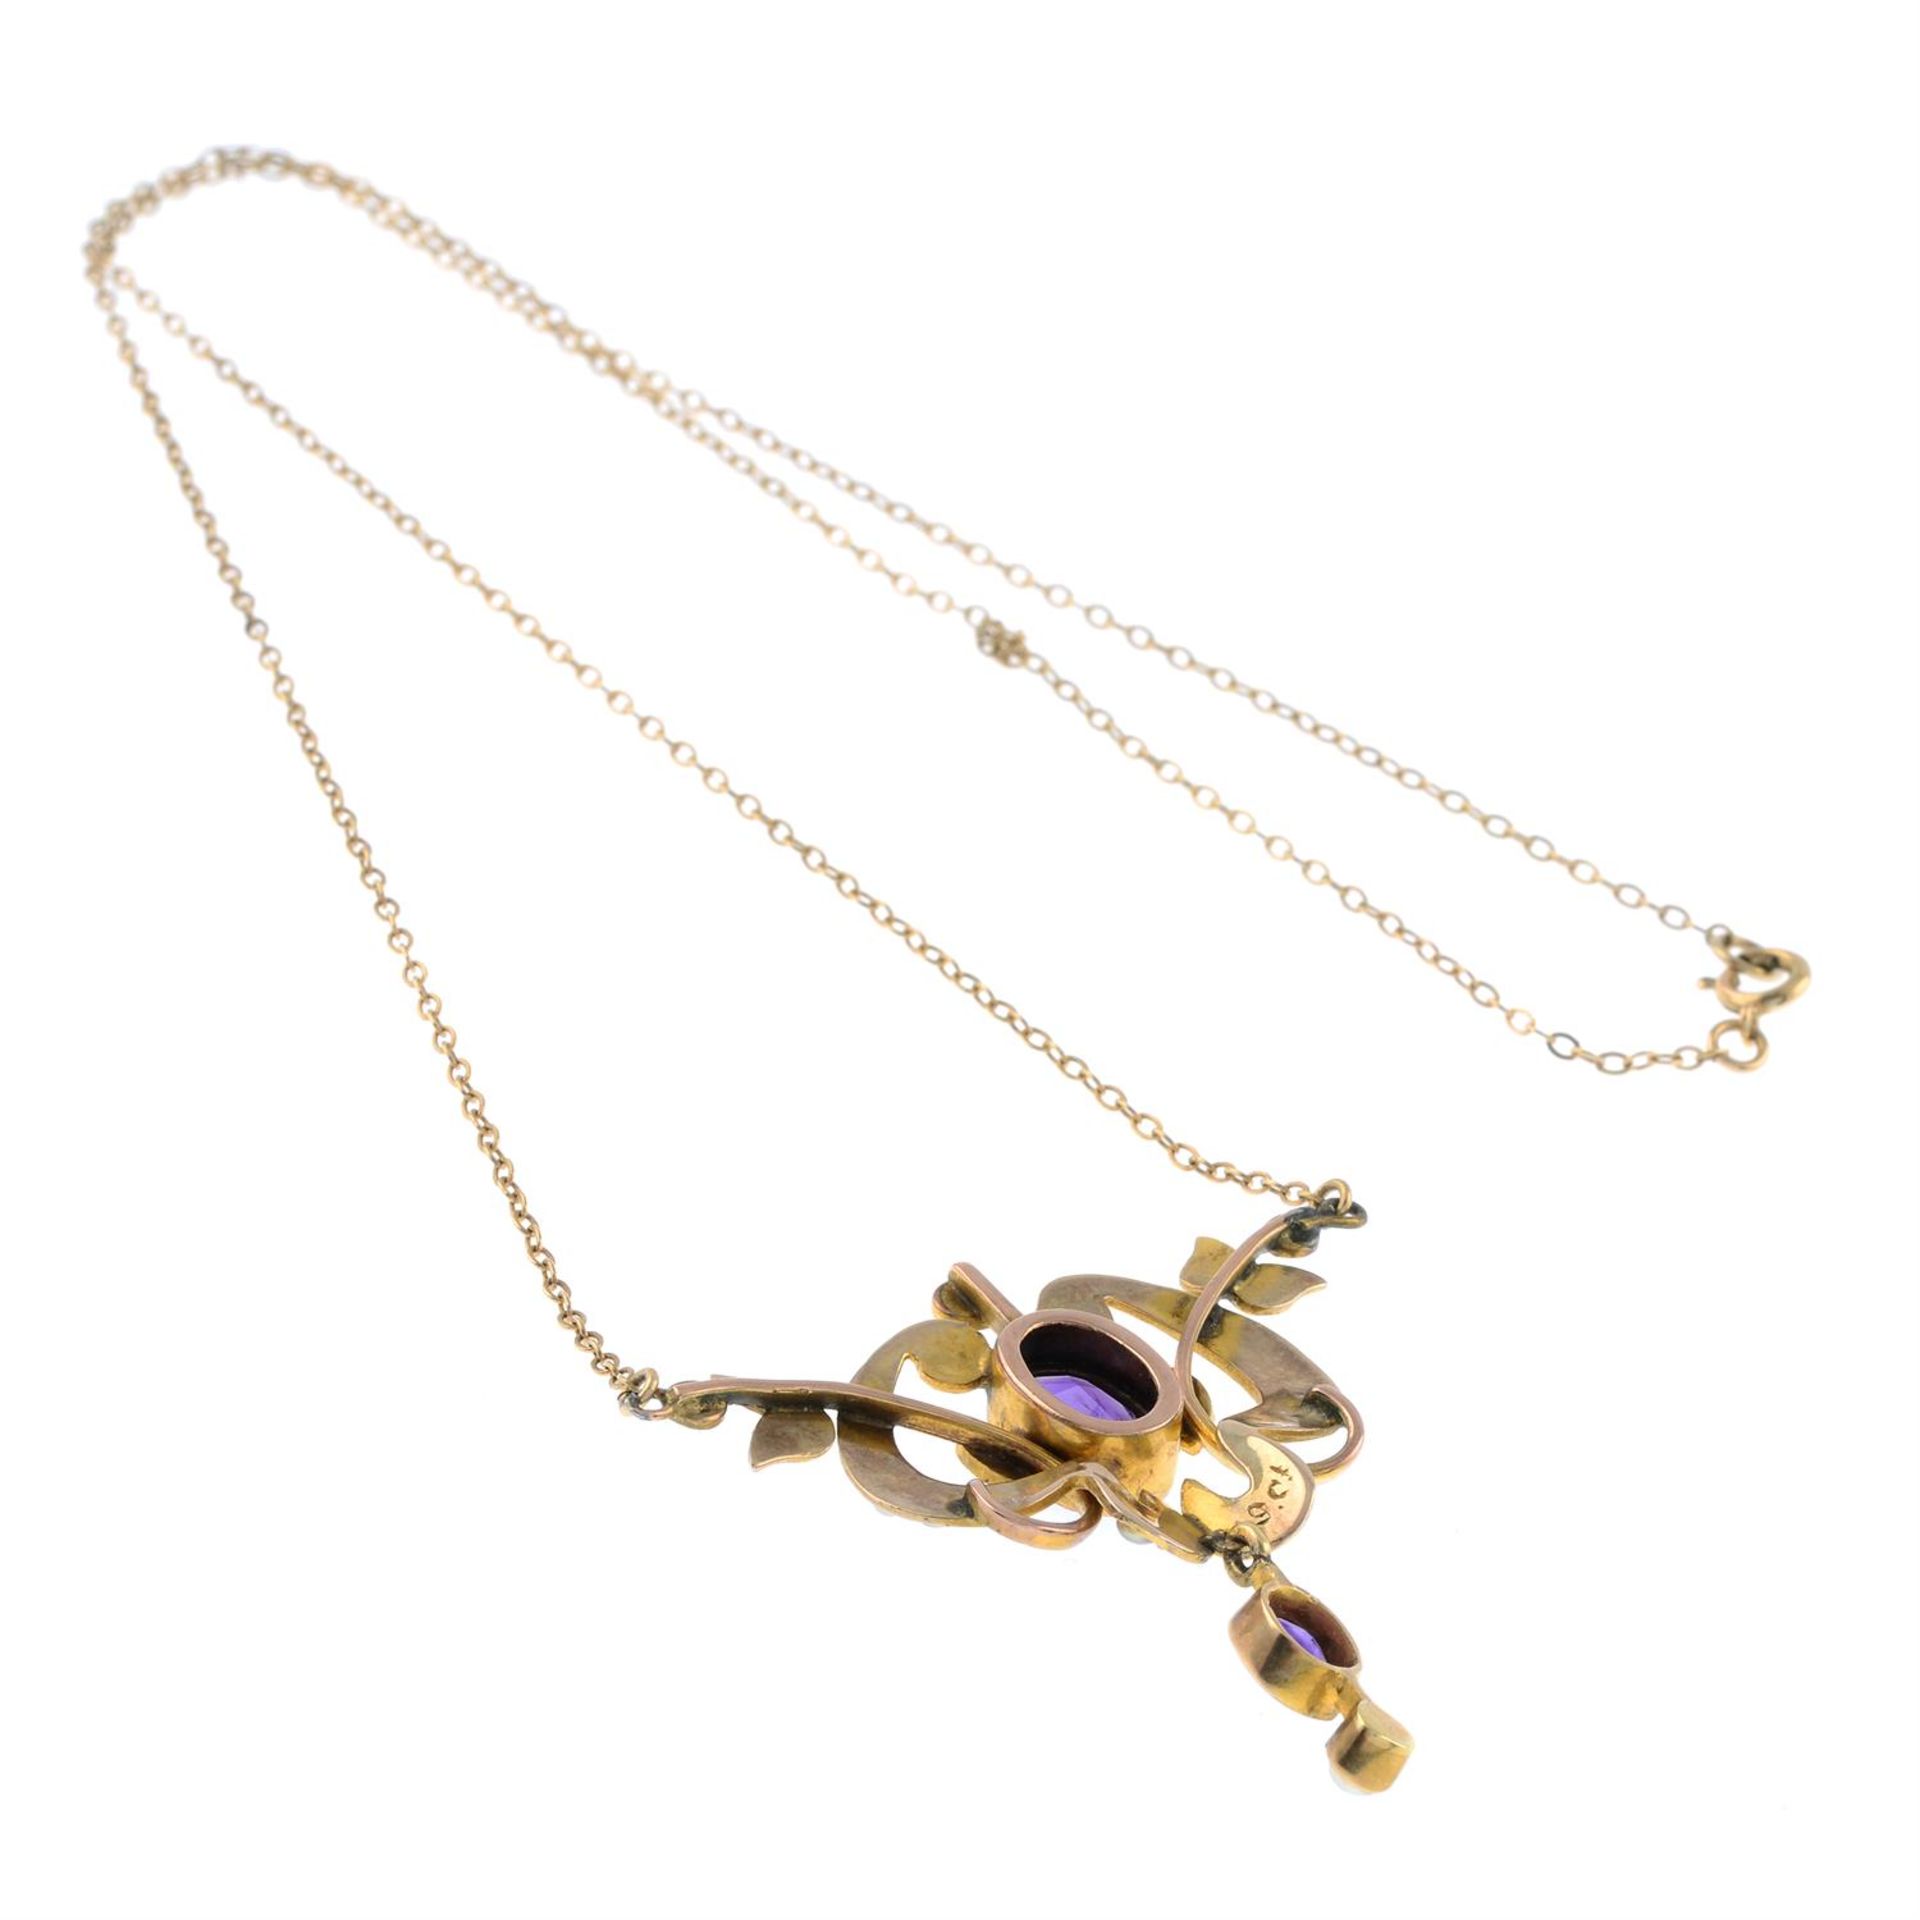 Edwardian 9ct gold amethyst & split pearl pendant necklace - Image 2 of 2